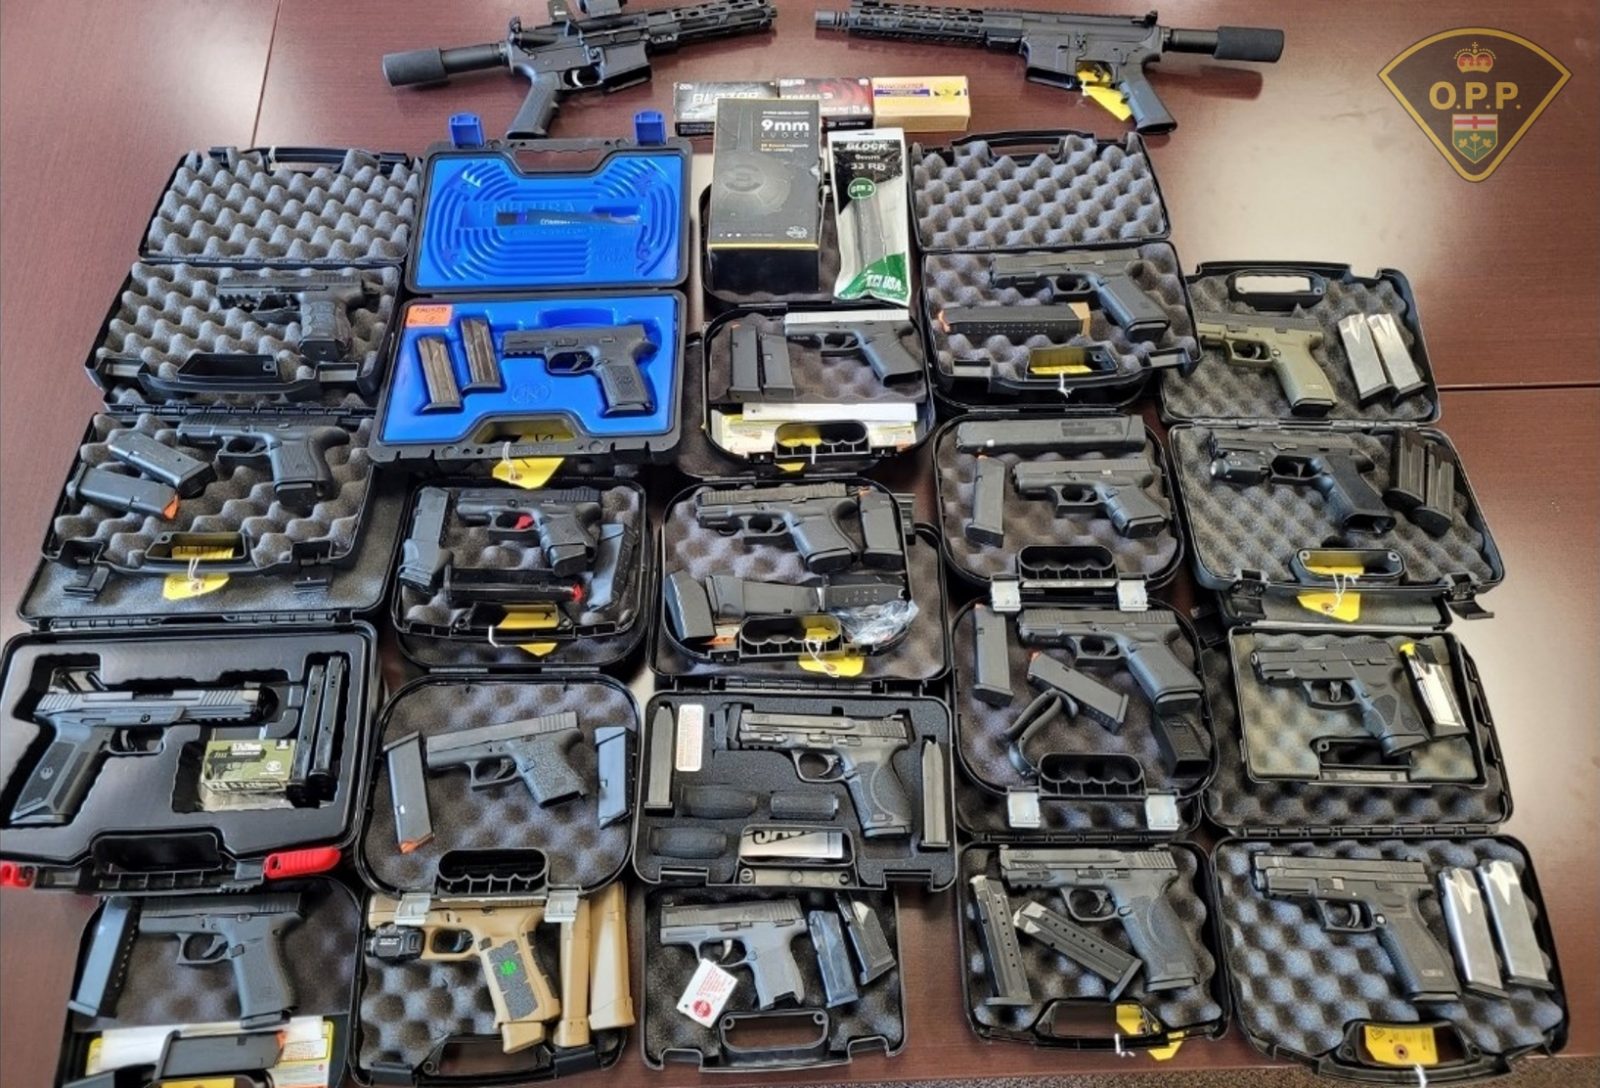 28 illegal firearms seized